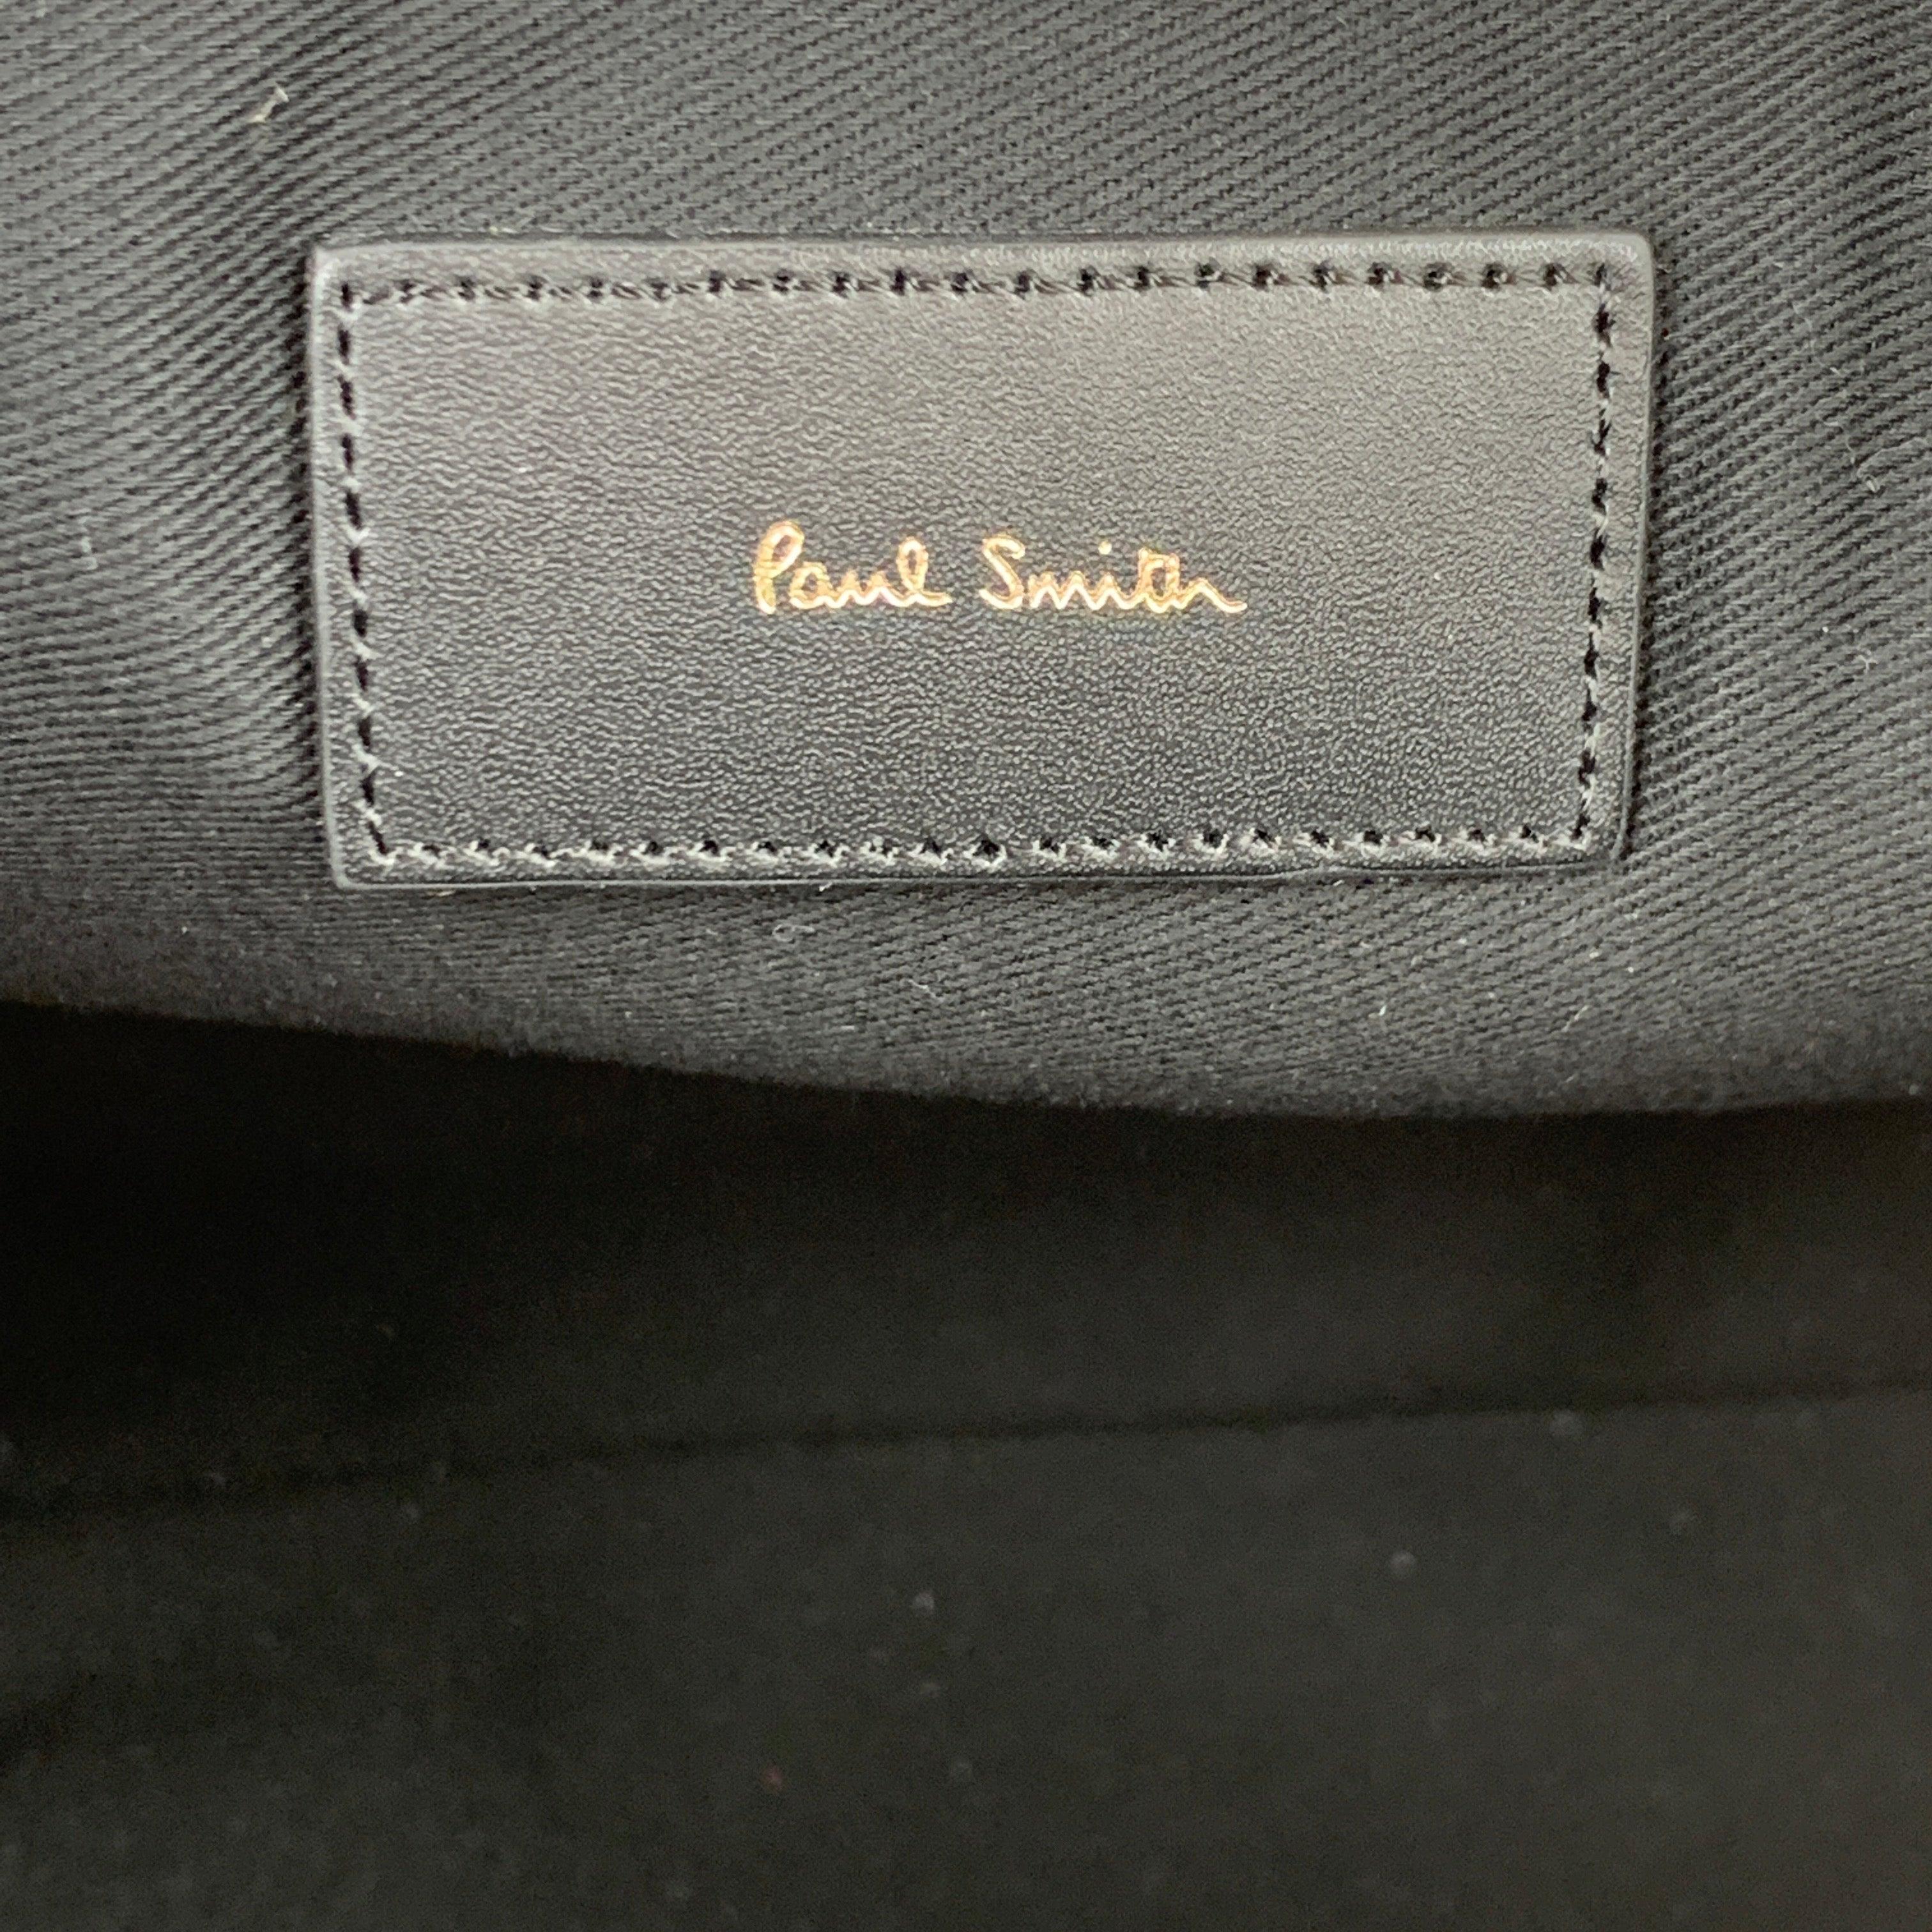 PAUL SMITH Black Pebble Grain Leather Briefcase Bag For Sale 4